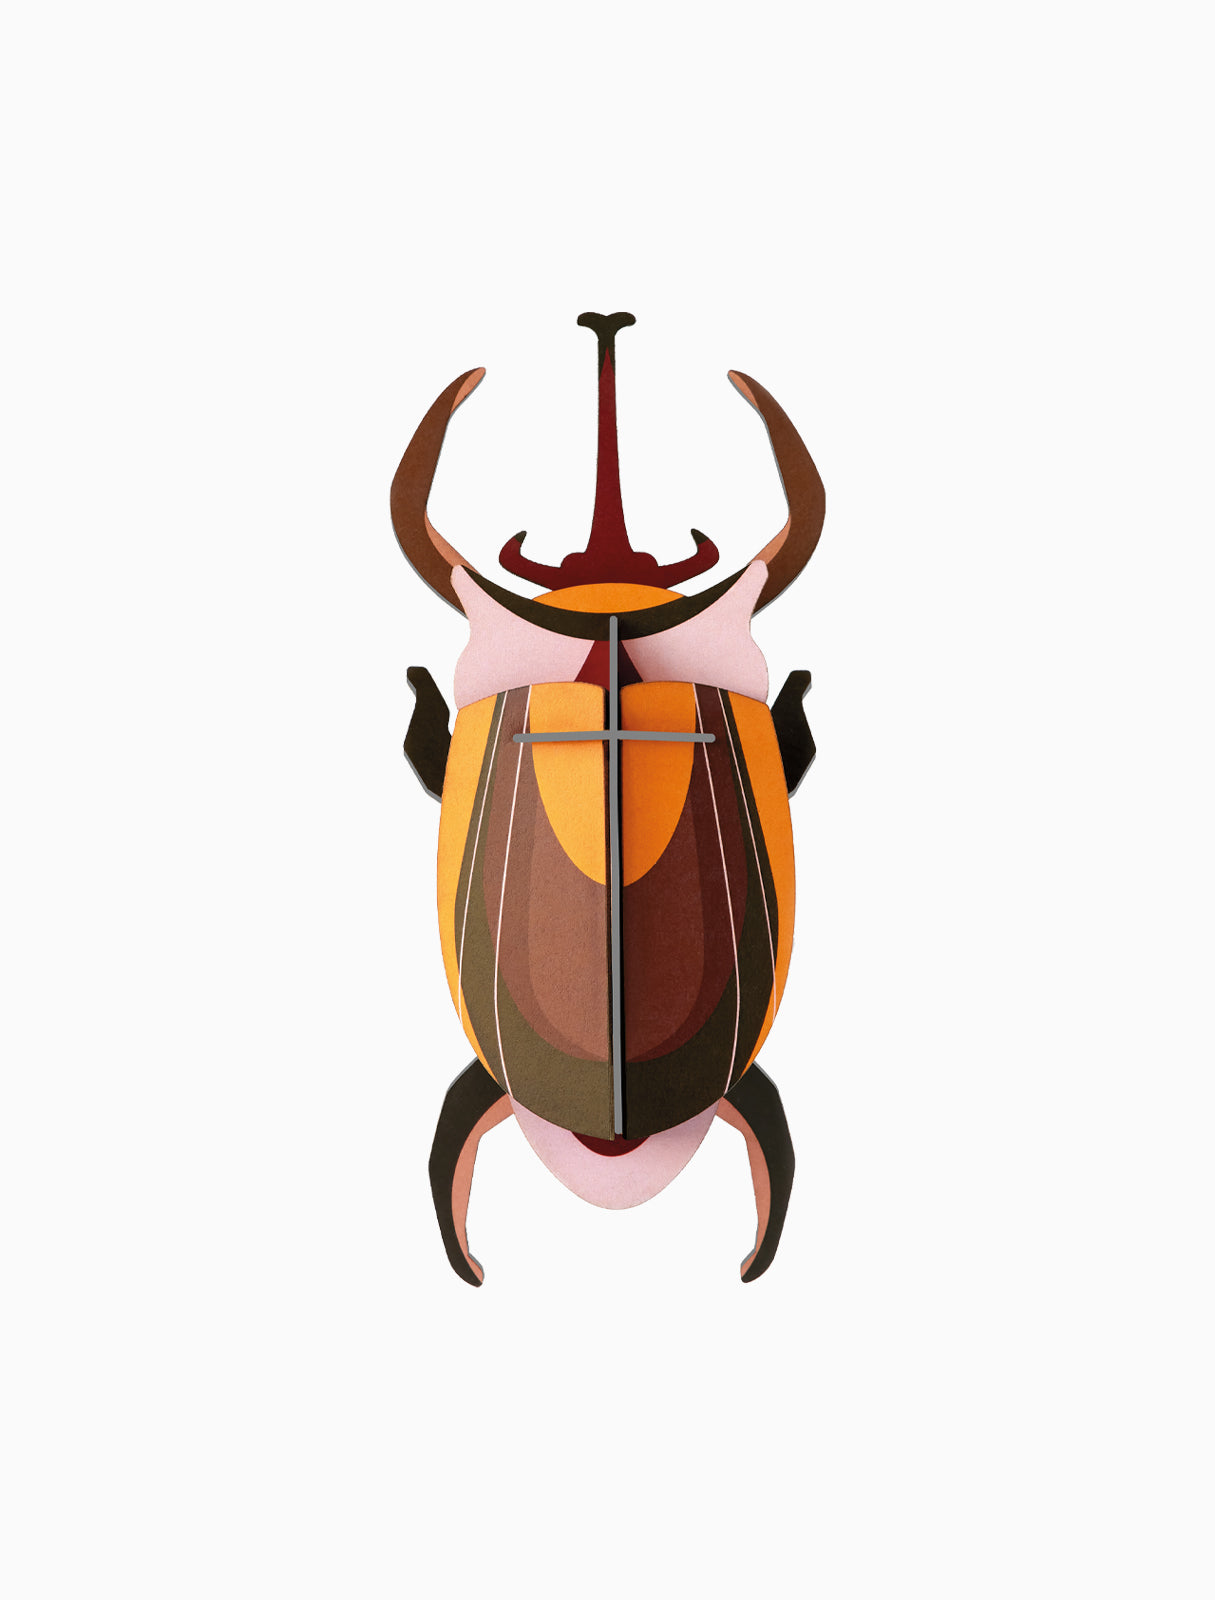 Studio ROOF Insects - Elephant Beetle